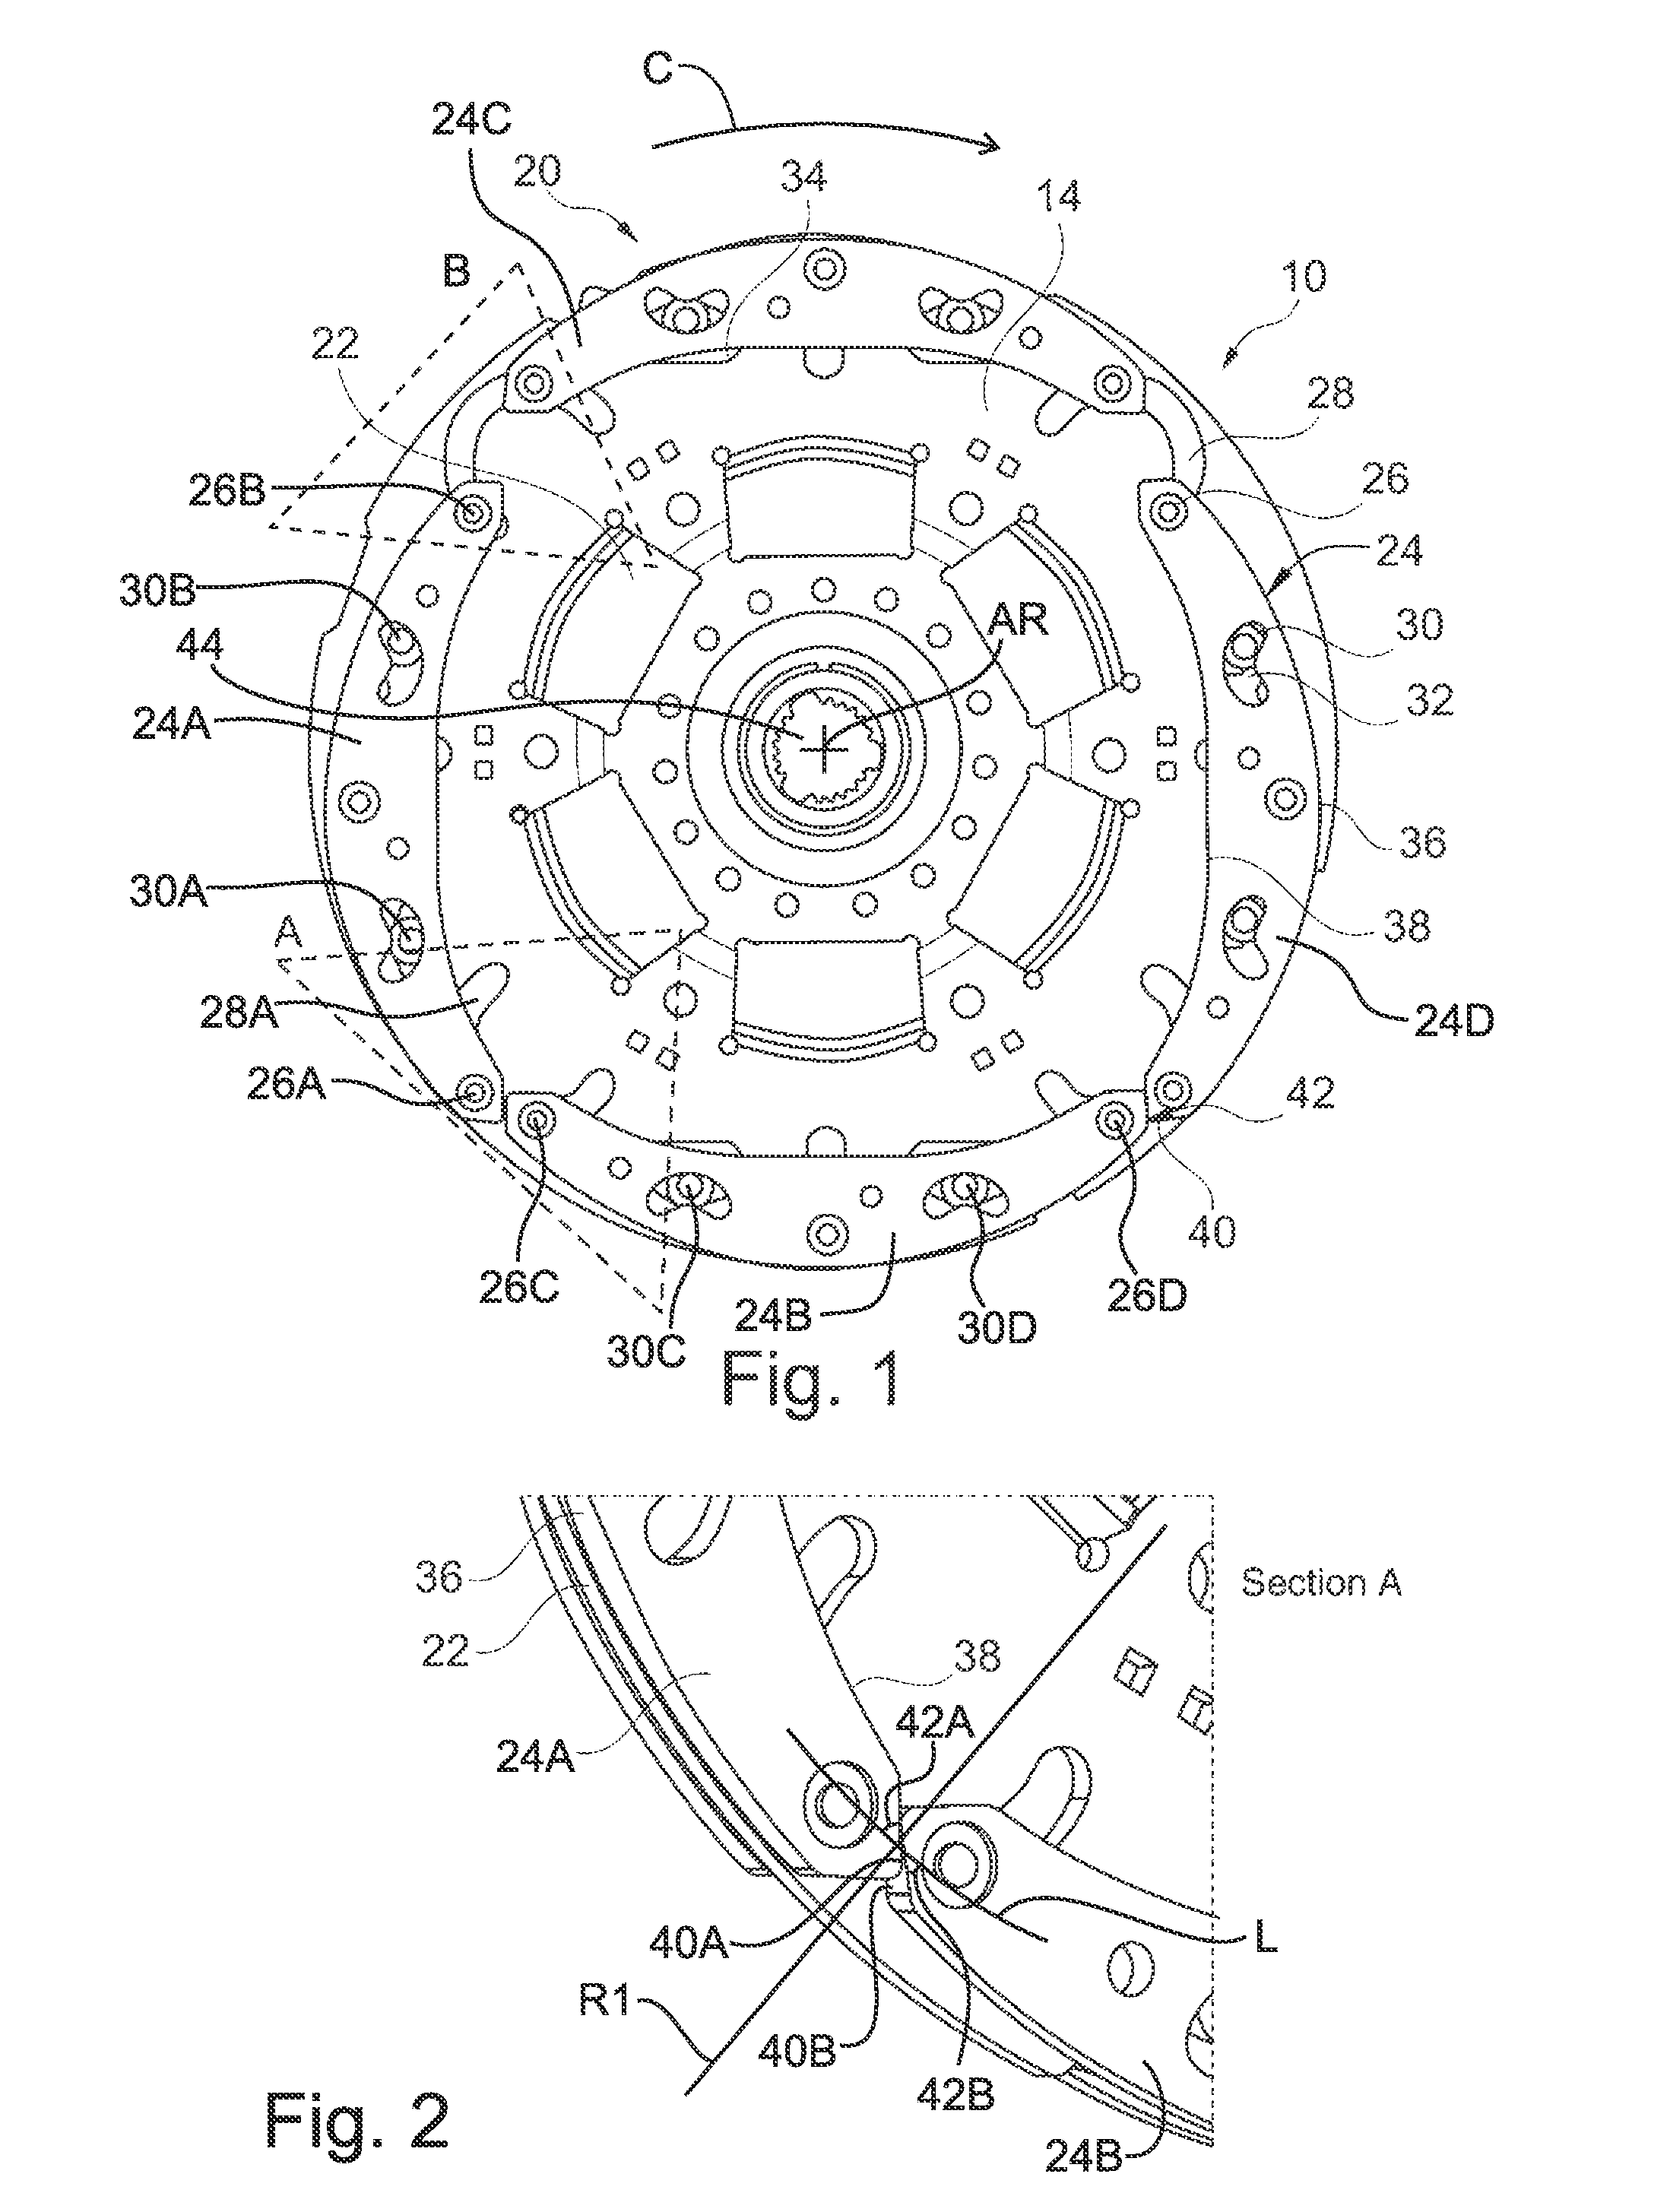 Centrifugal pendulum mechanism